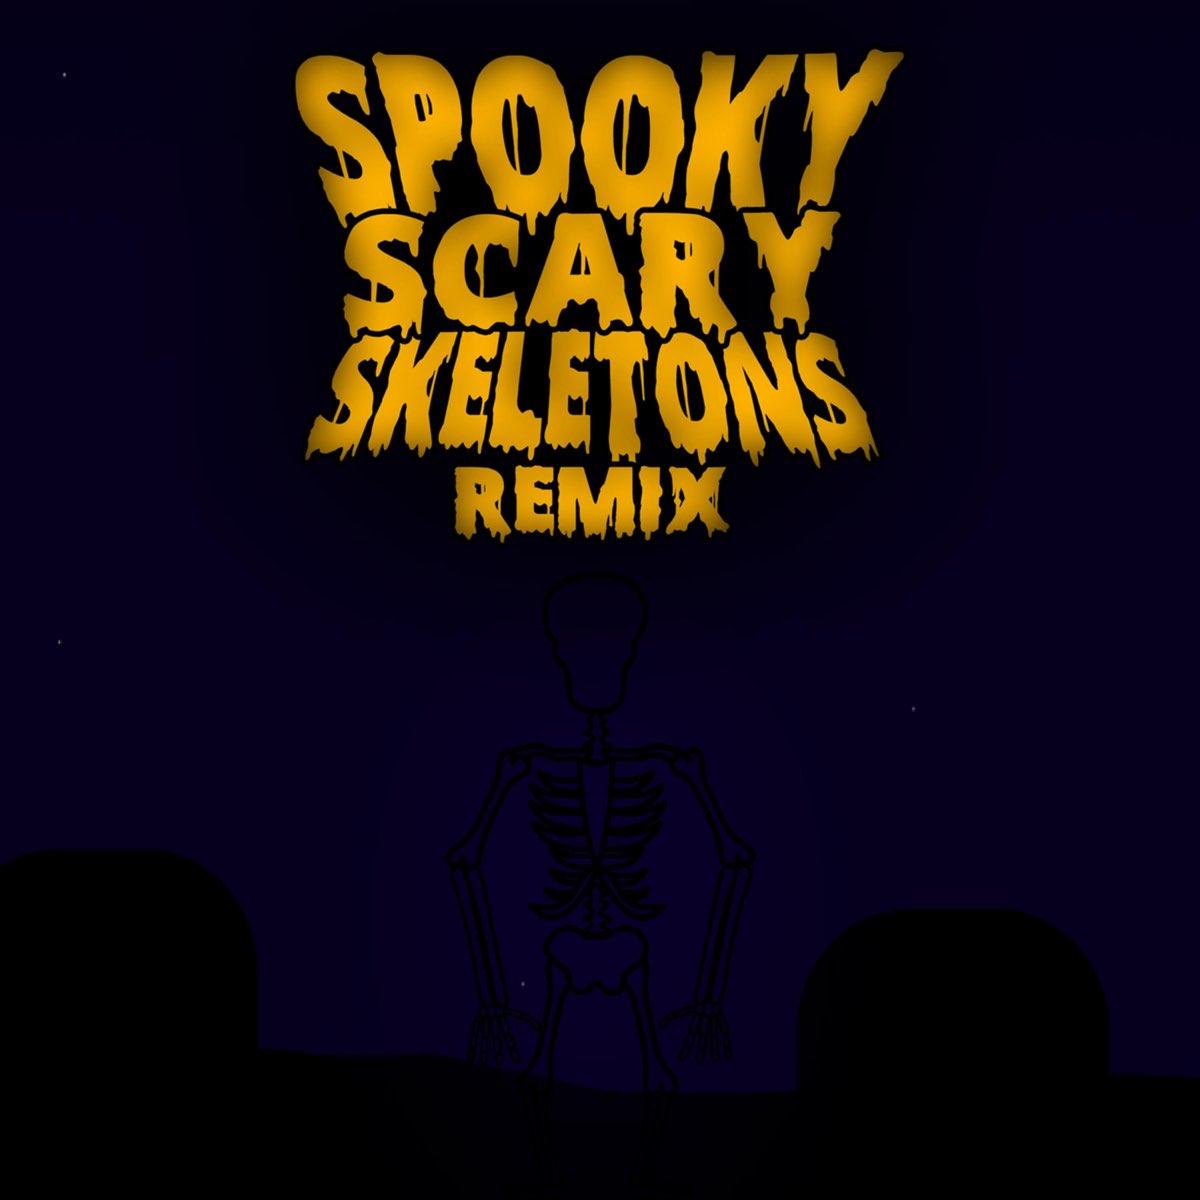 Scary skeletons remix. Spooky Scary Skeletons Remix. Spooky Scary Skeletons текст. Spooky Scary Skeletons Dry paper Remix. Текст песни Spooky Scary Skeletons.